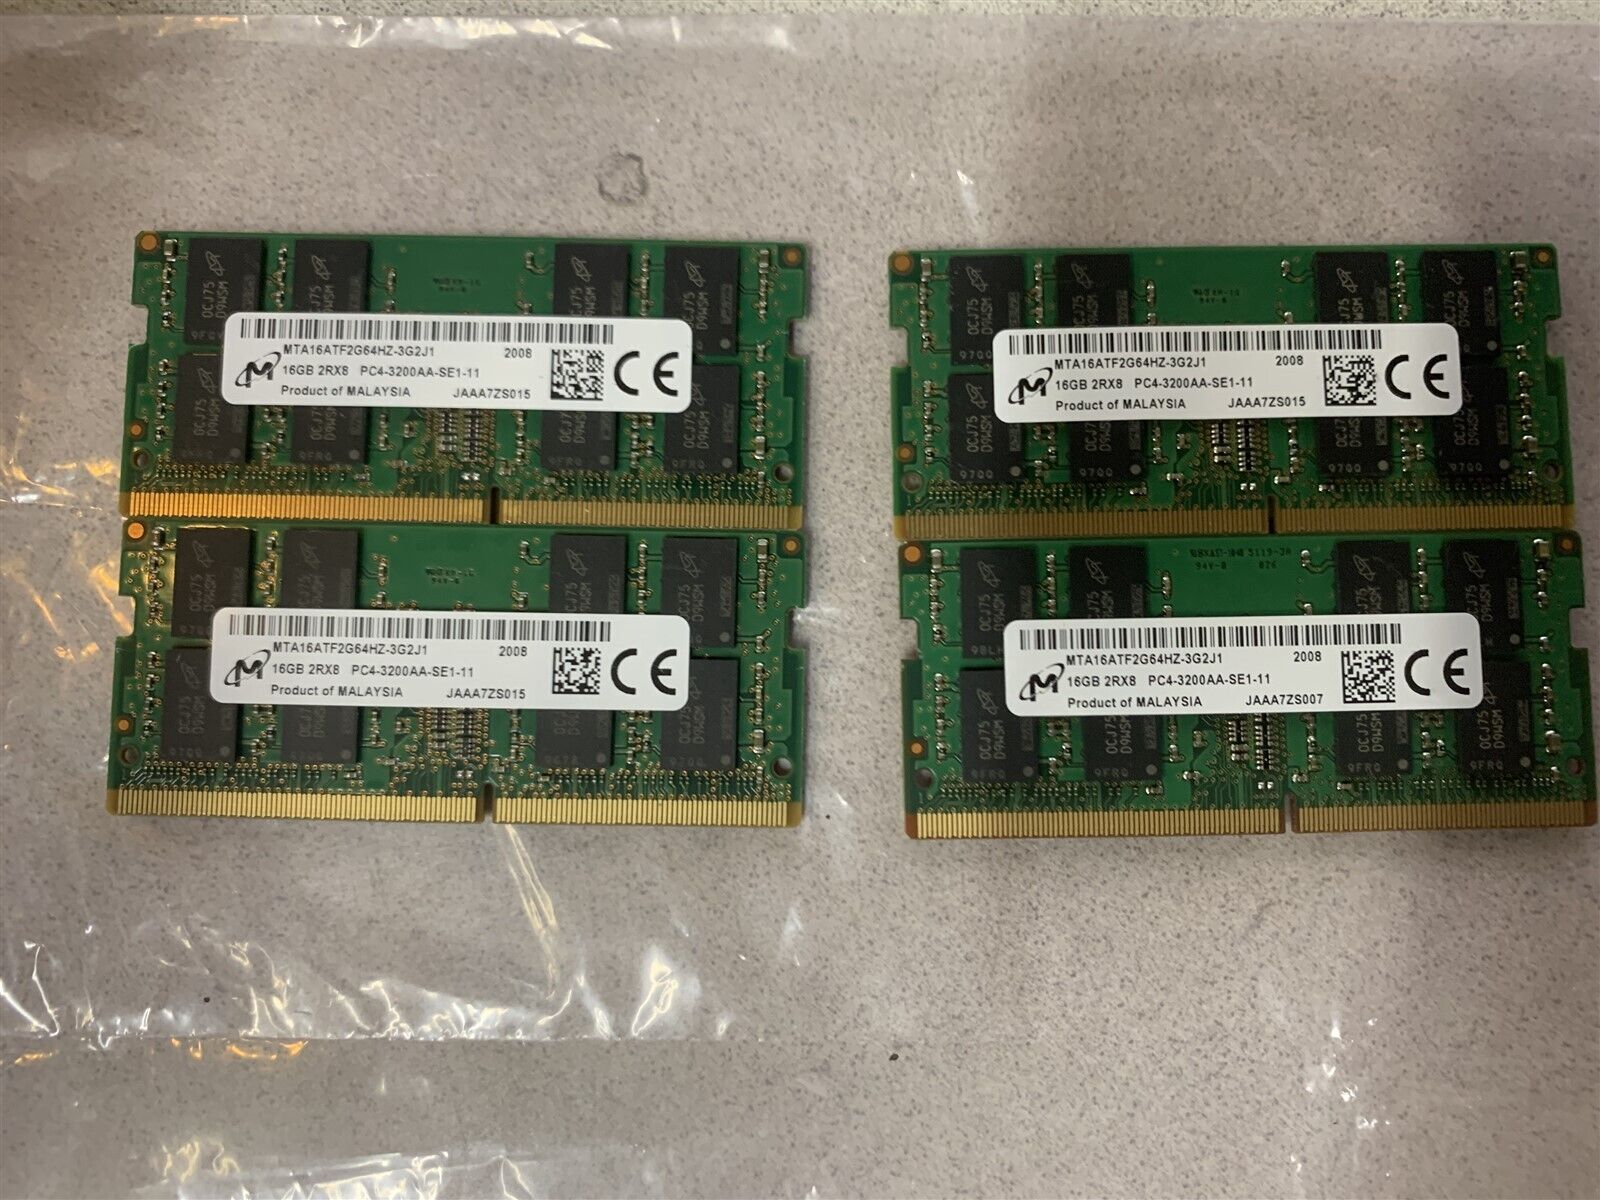 MICRON 64GB(4X16GB) PC4-3200AA MEMORY MTA16ATF2G64HZ-3G2J1